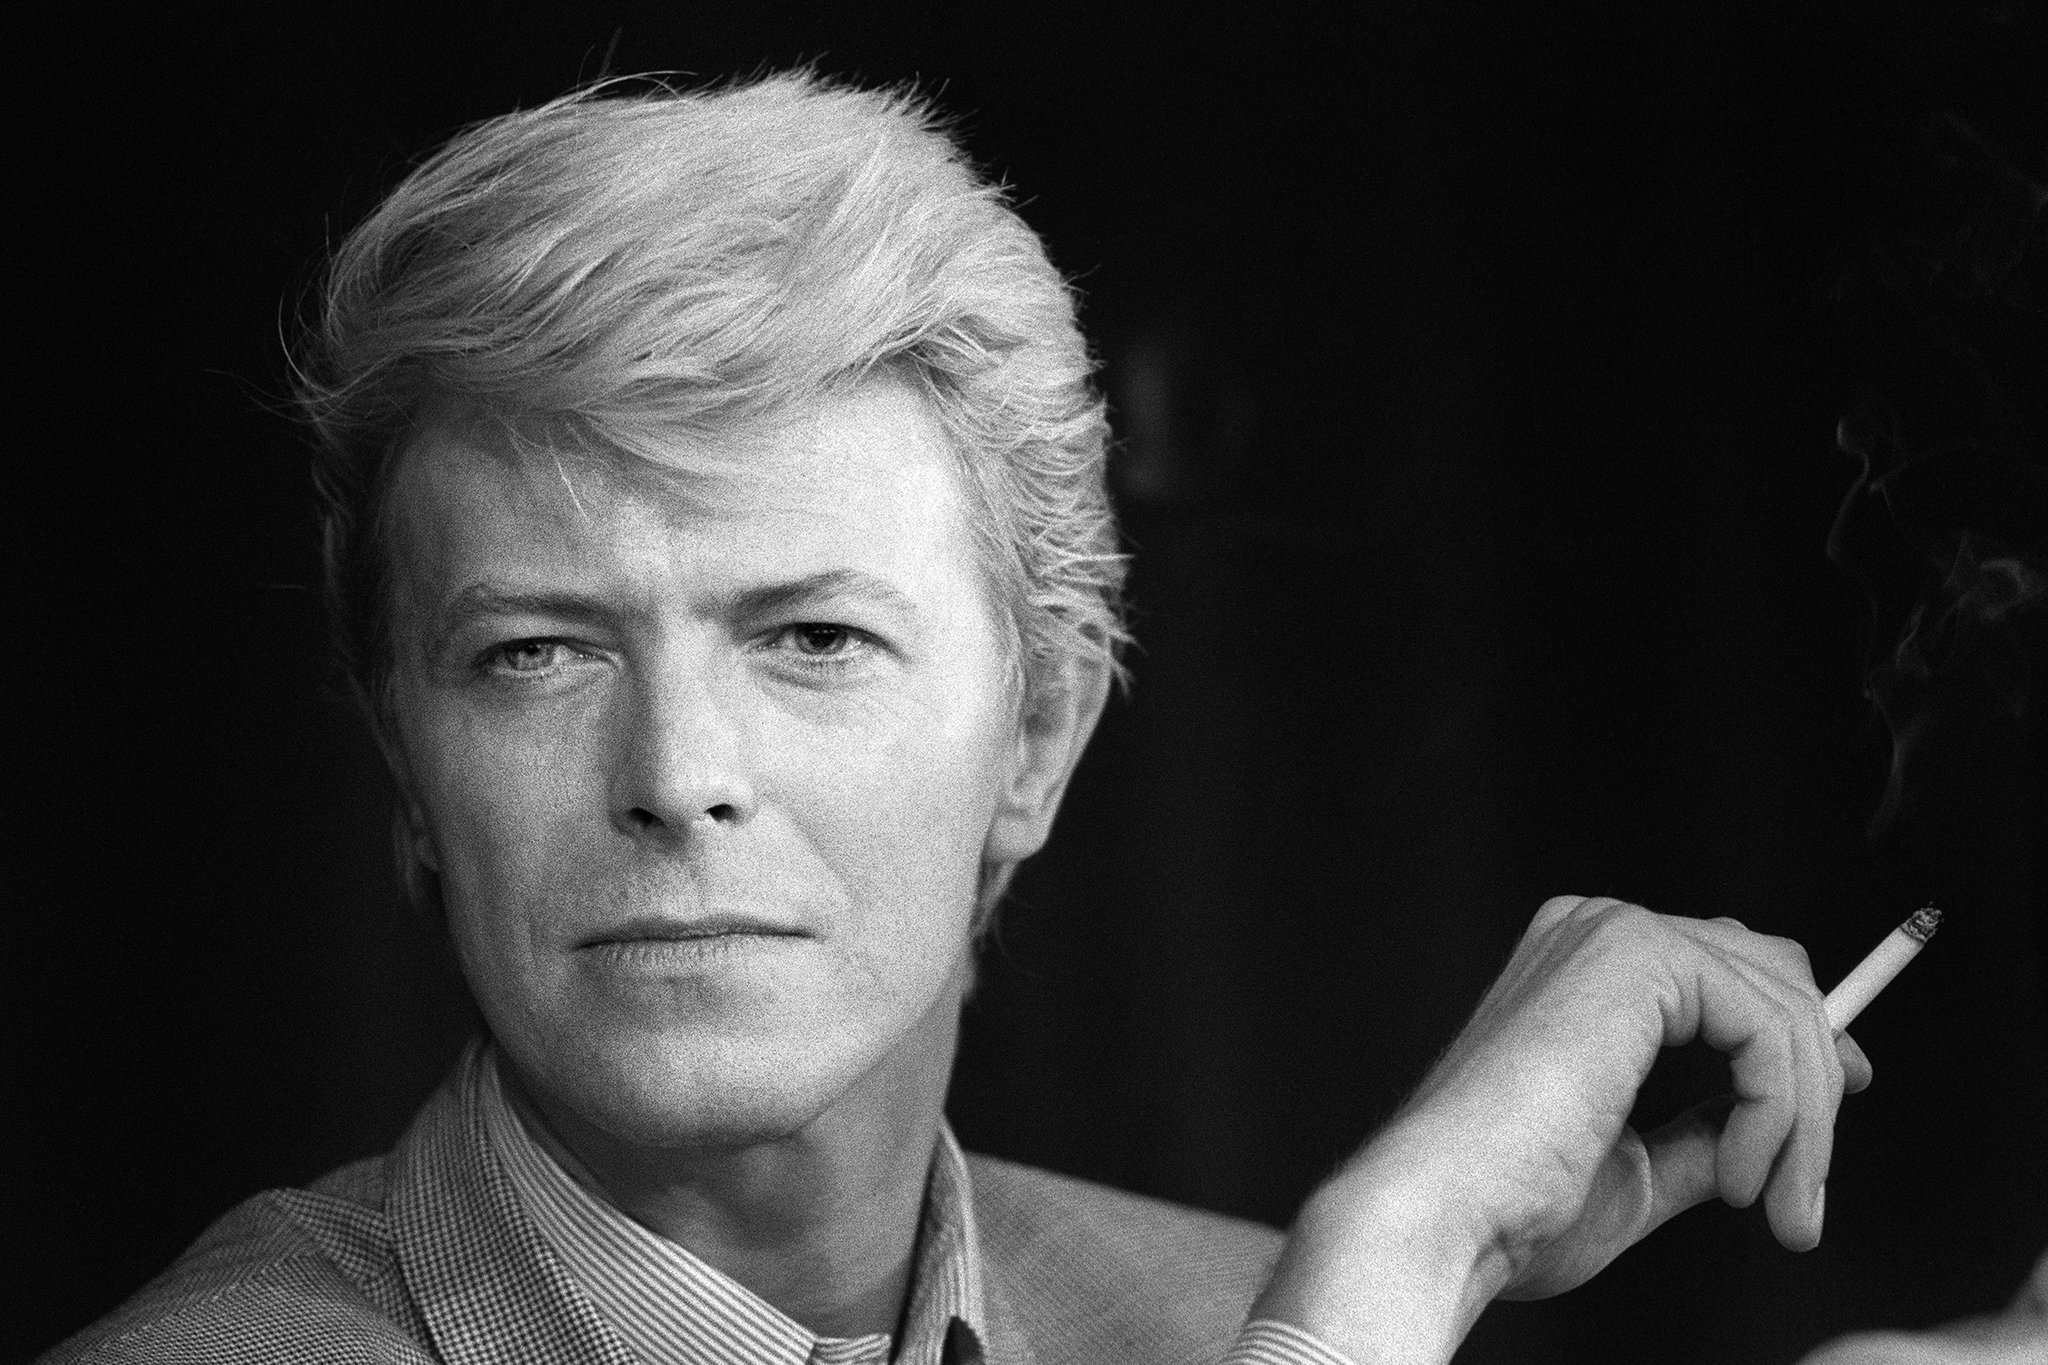 David Bowie #18